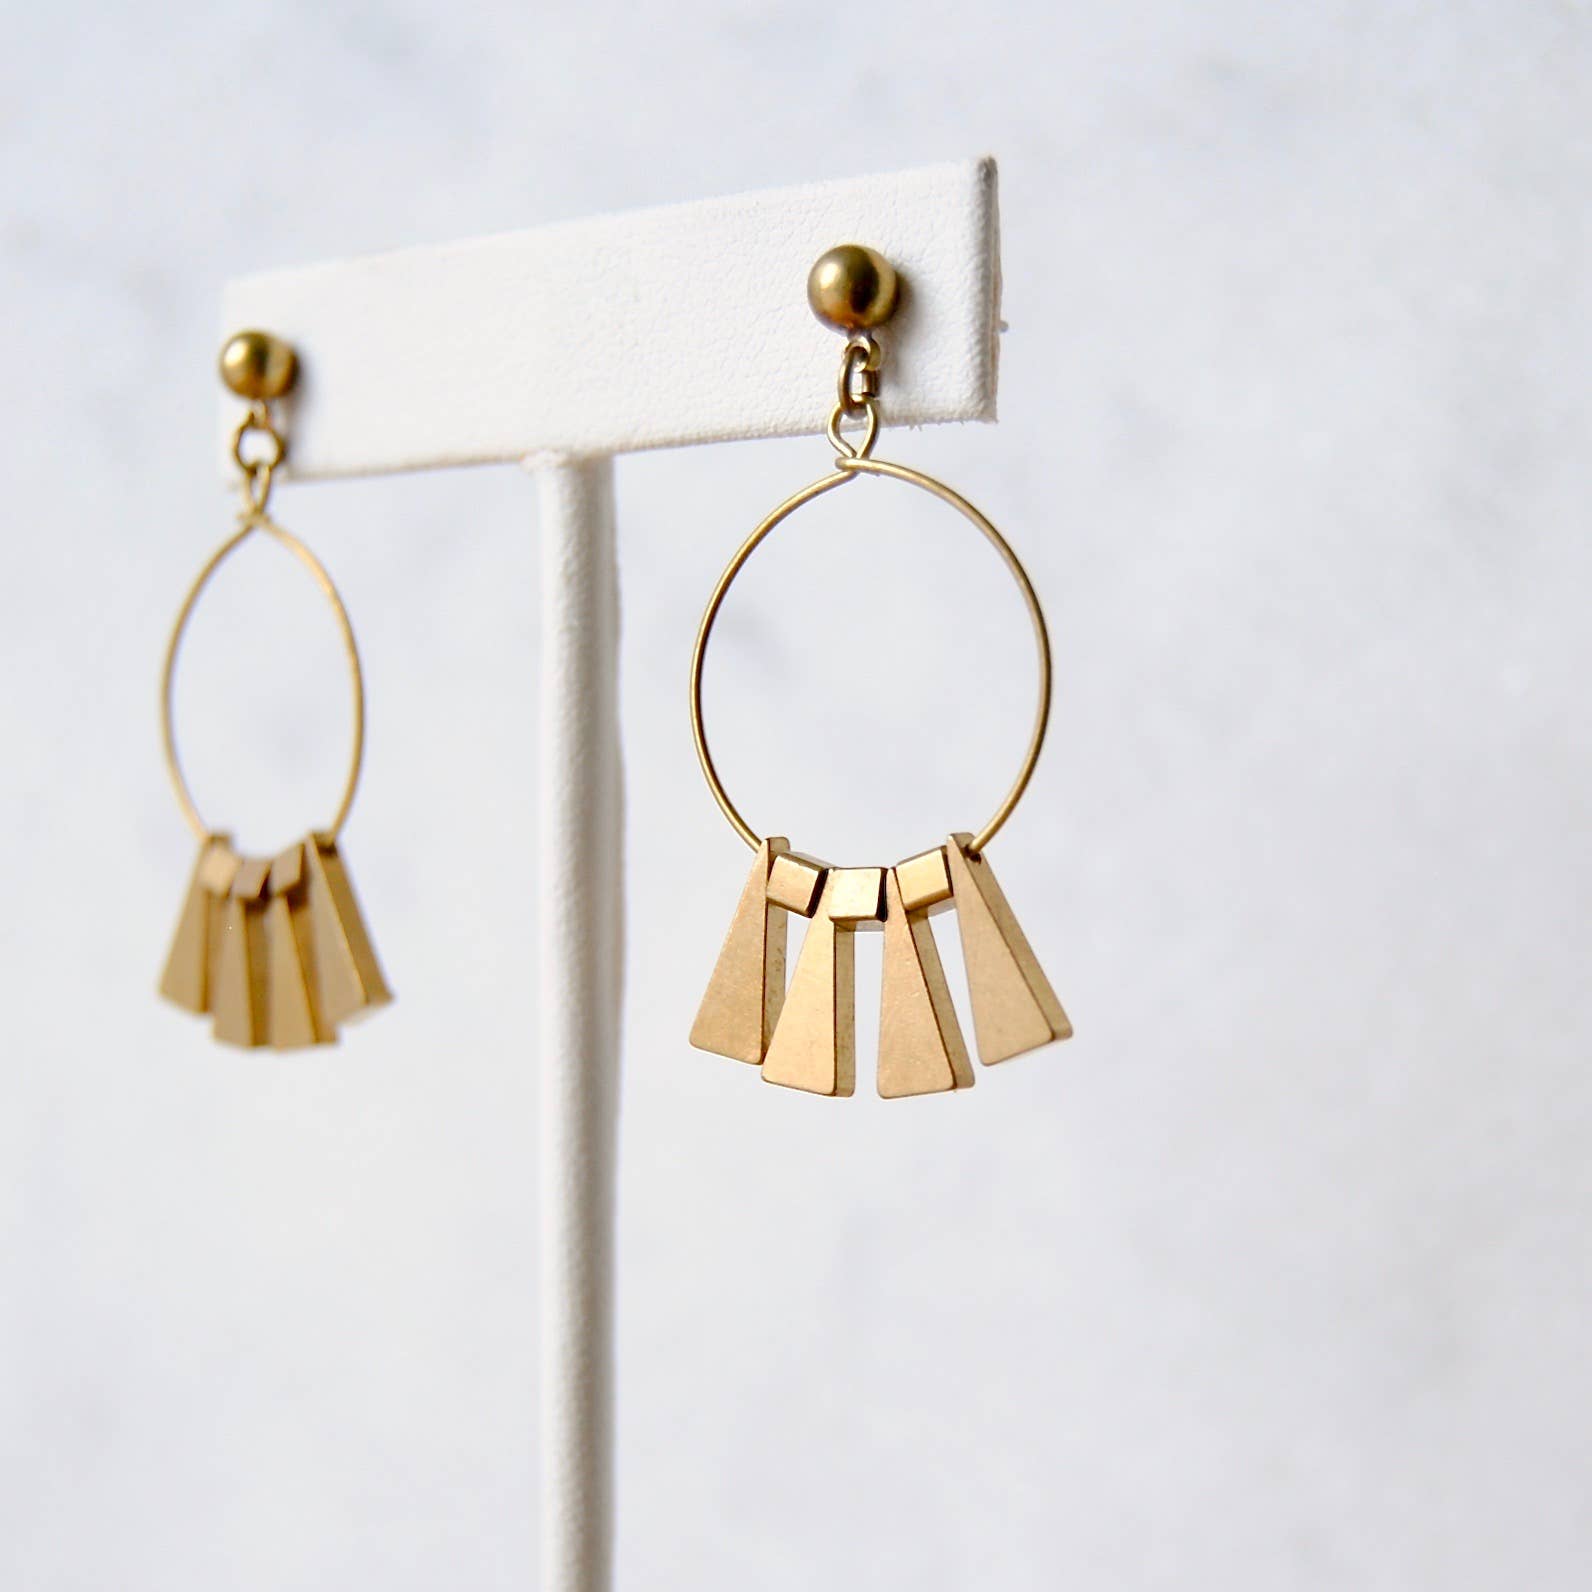 Spring Showers  Brass Earrings  Statement Earrings  Sun Earrings  Gold Earrings  Boho Earrings  Bohemian